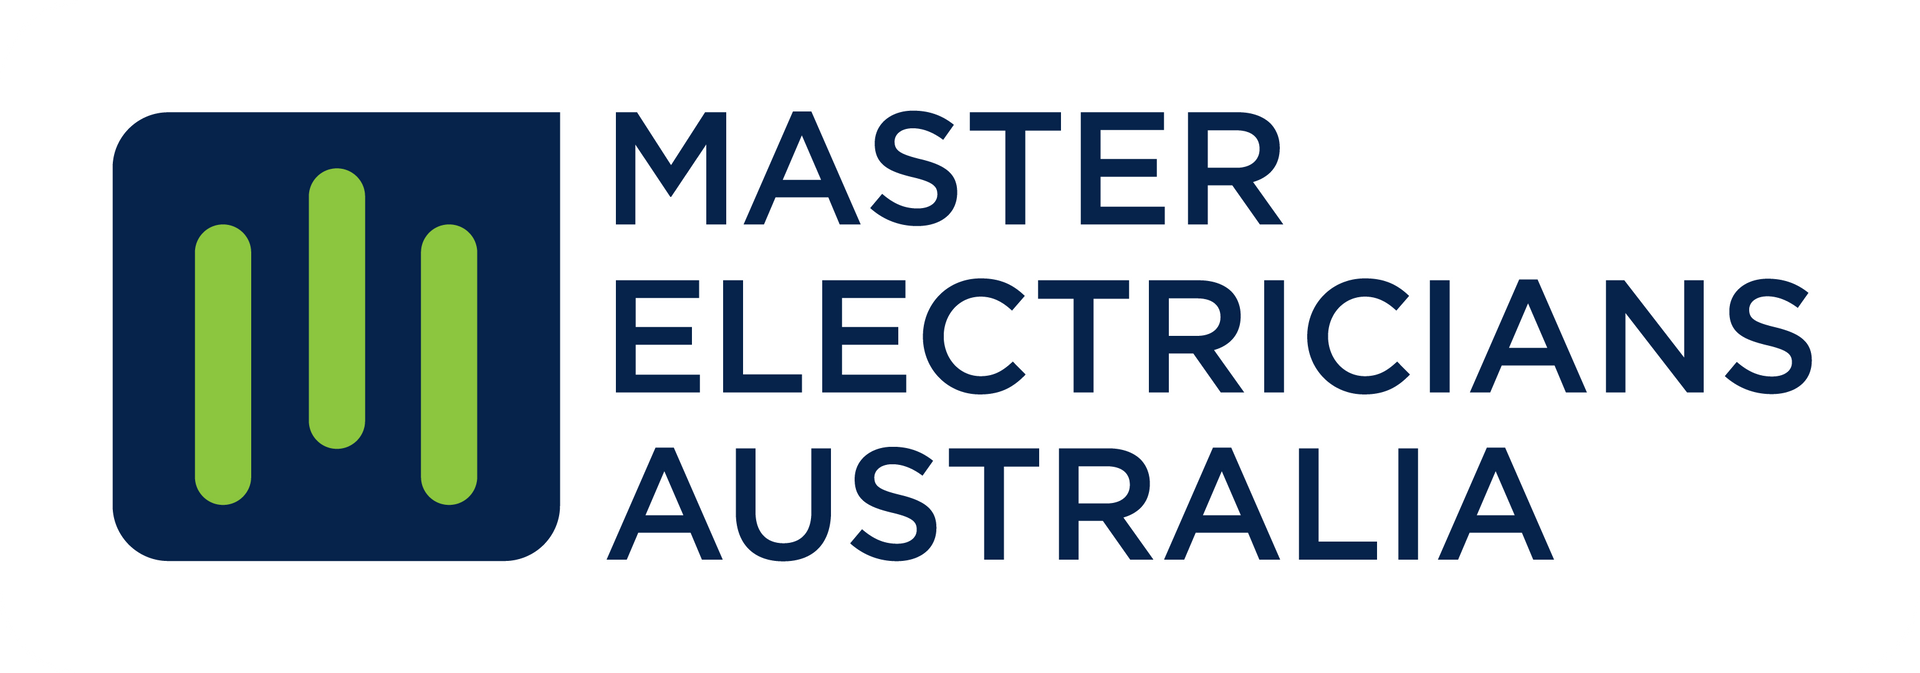 Master electrician’s member